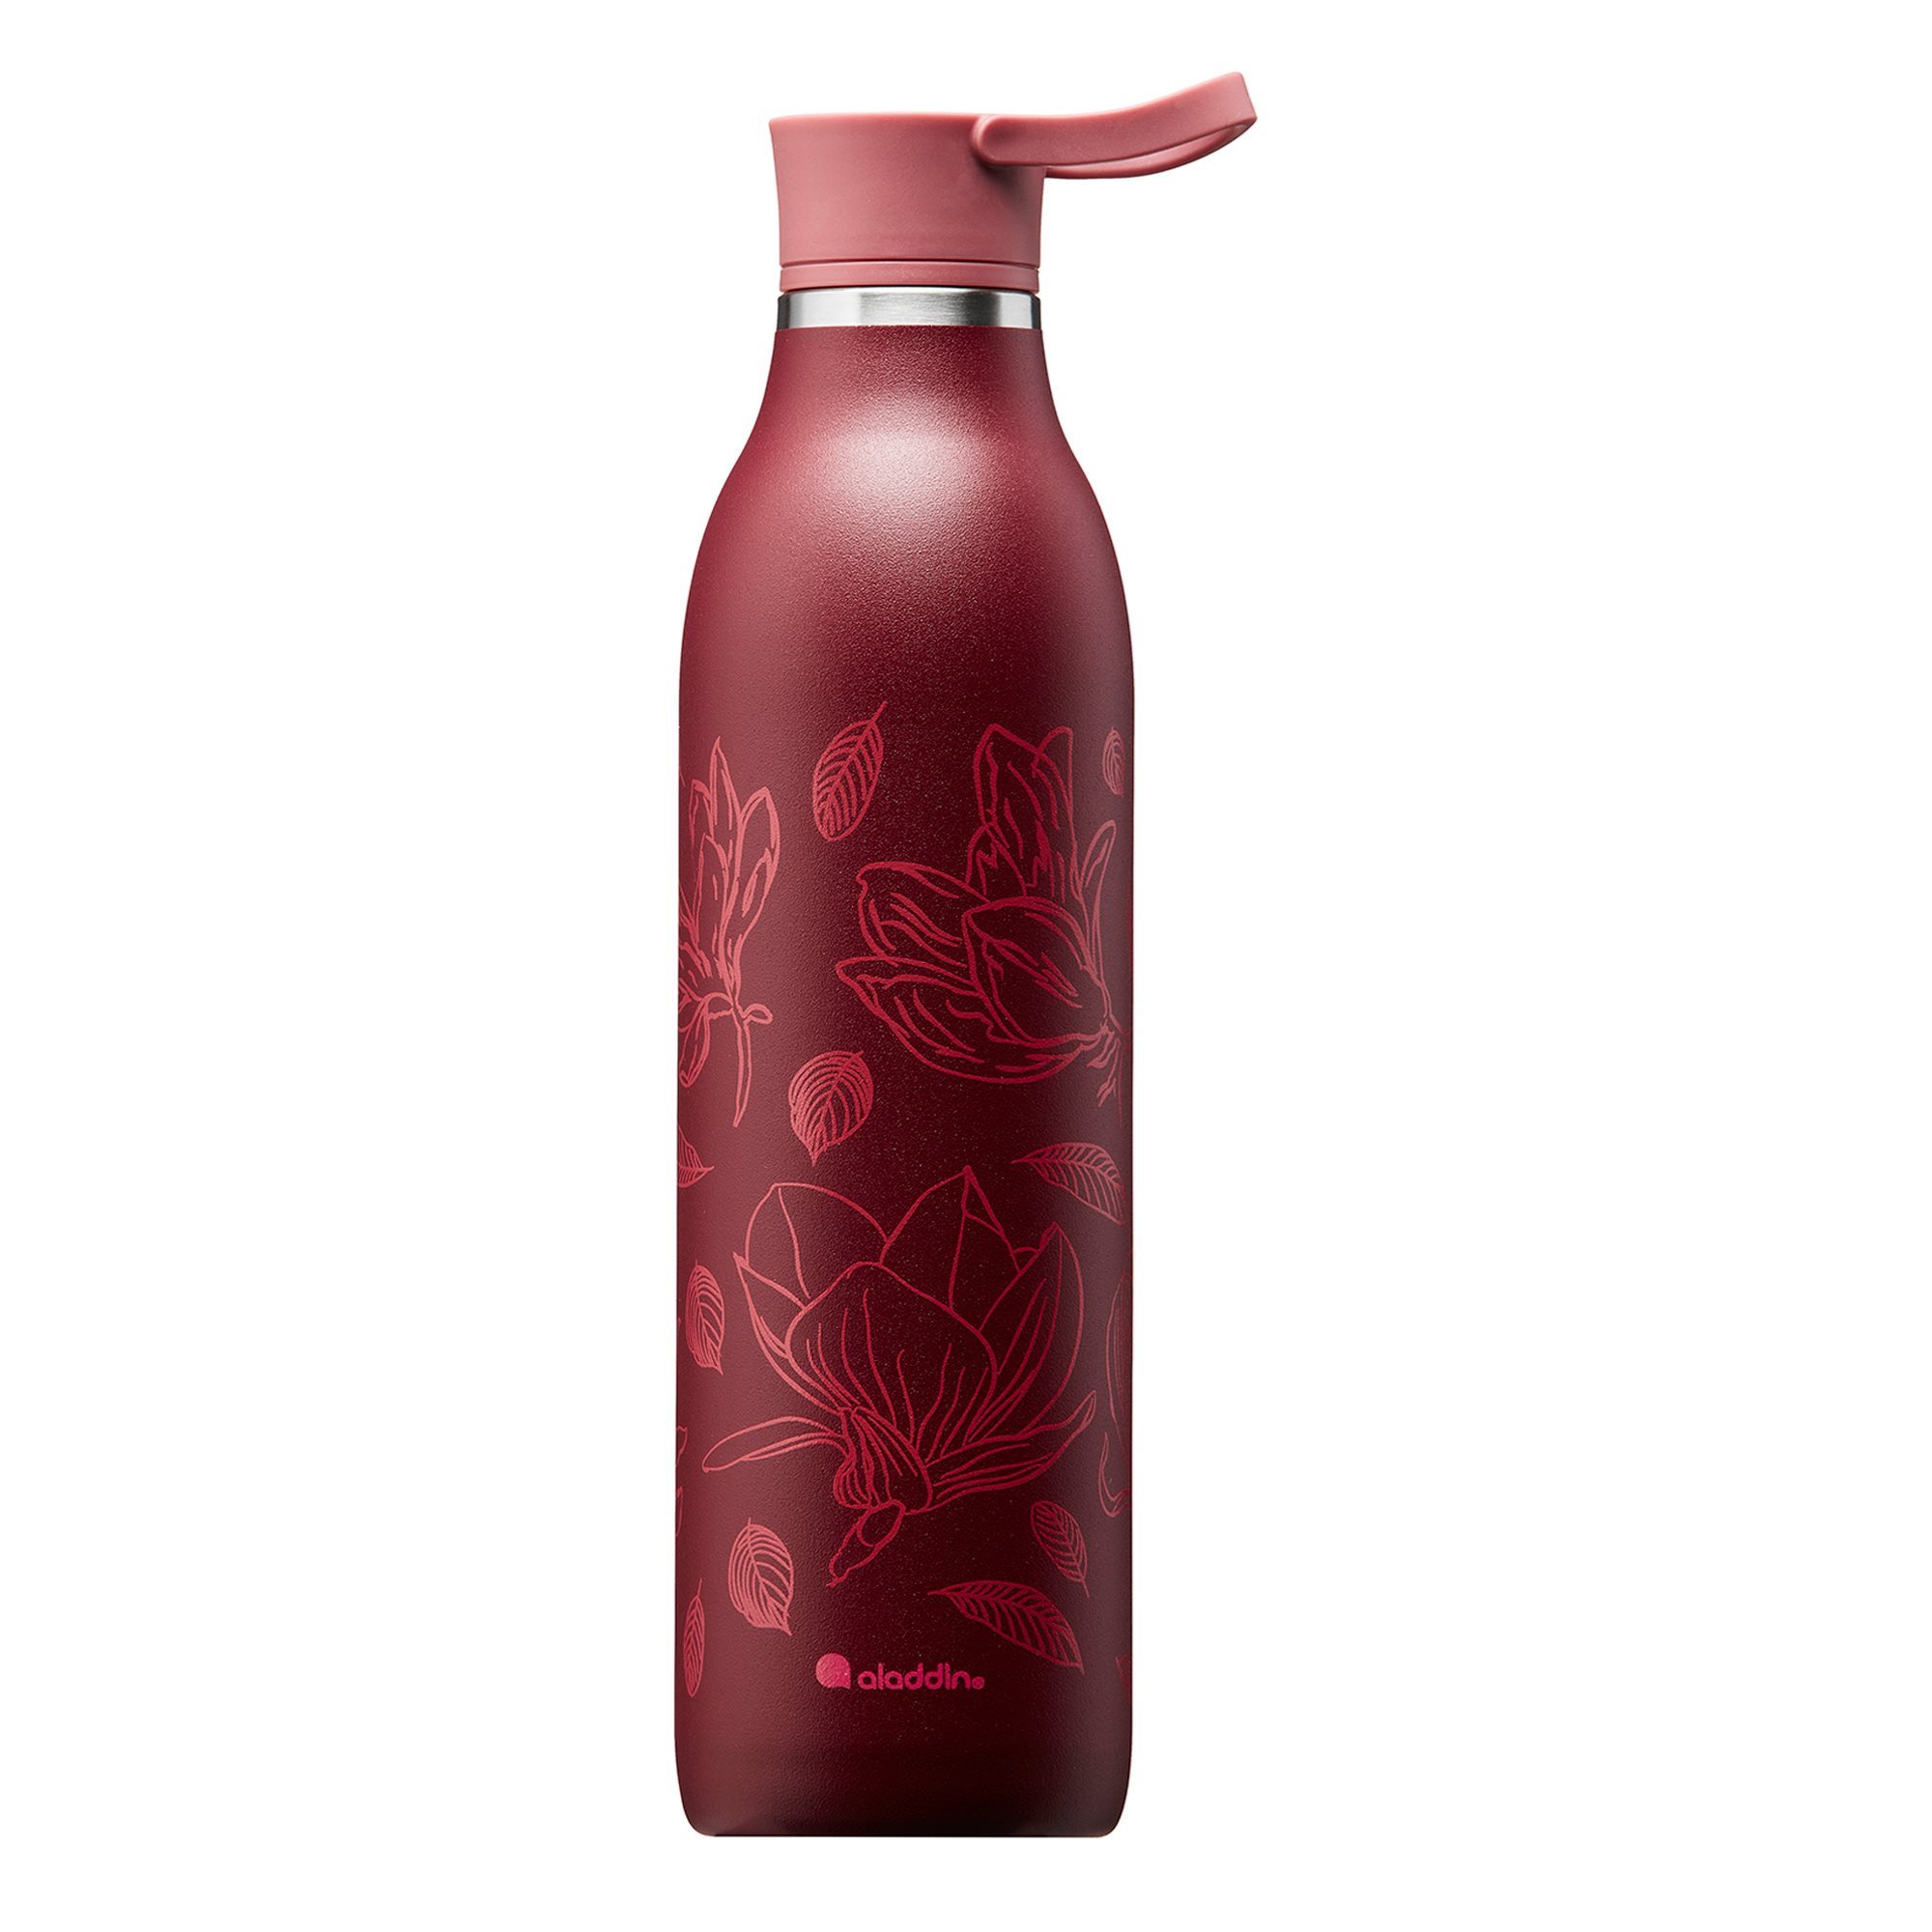 CND Floral Print Steel Water Bottle